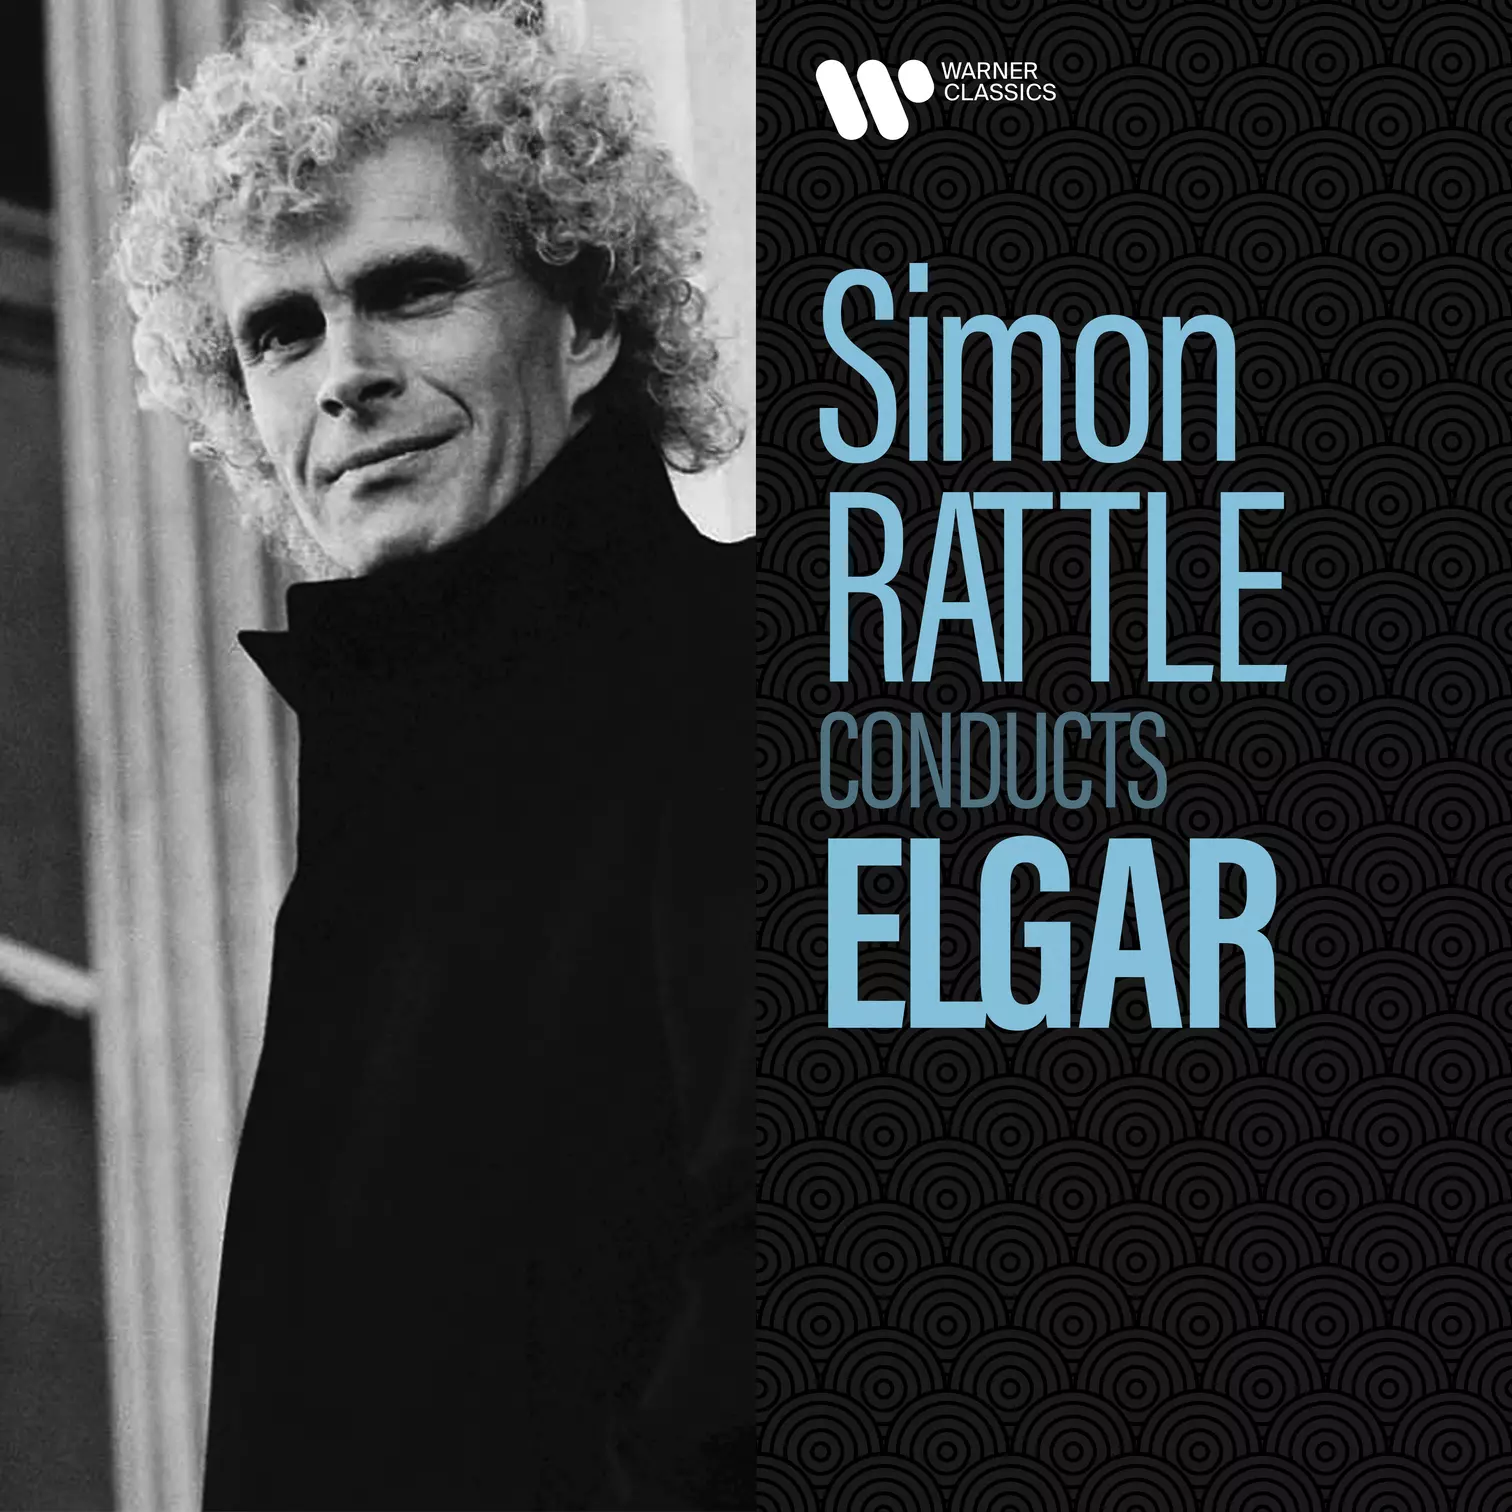 Simon Rattle Conducts Elgar